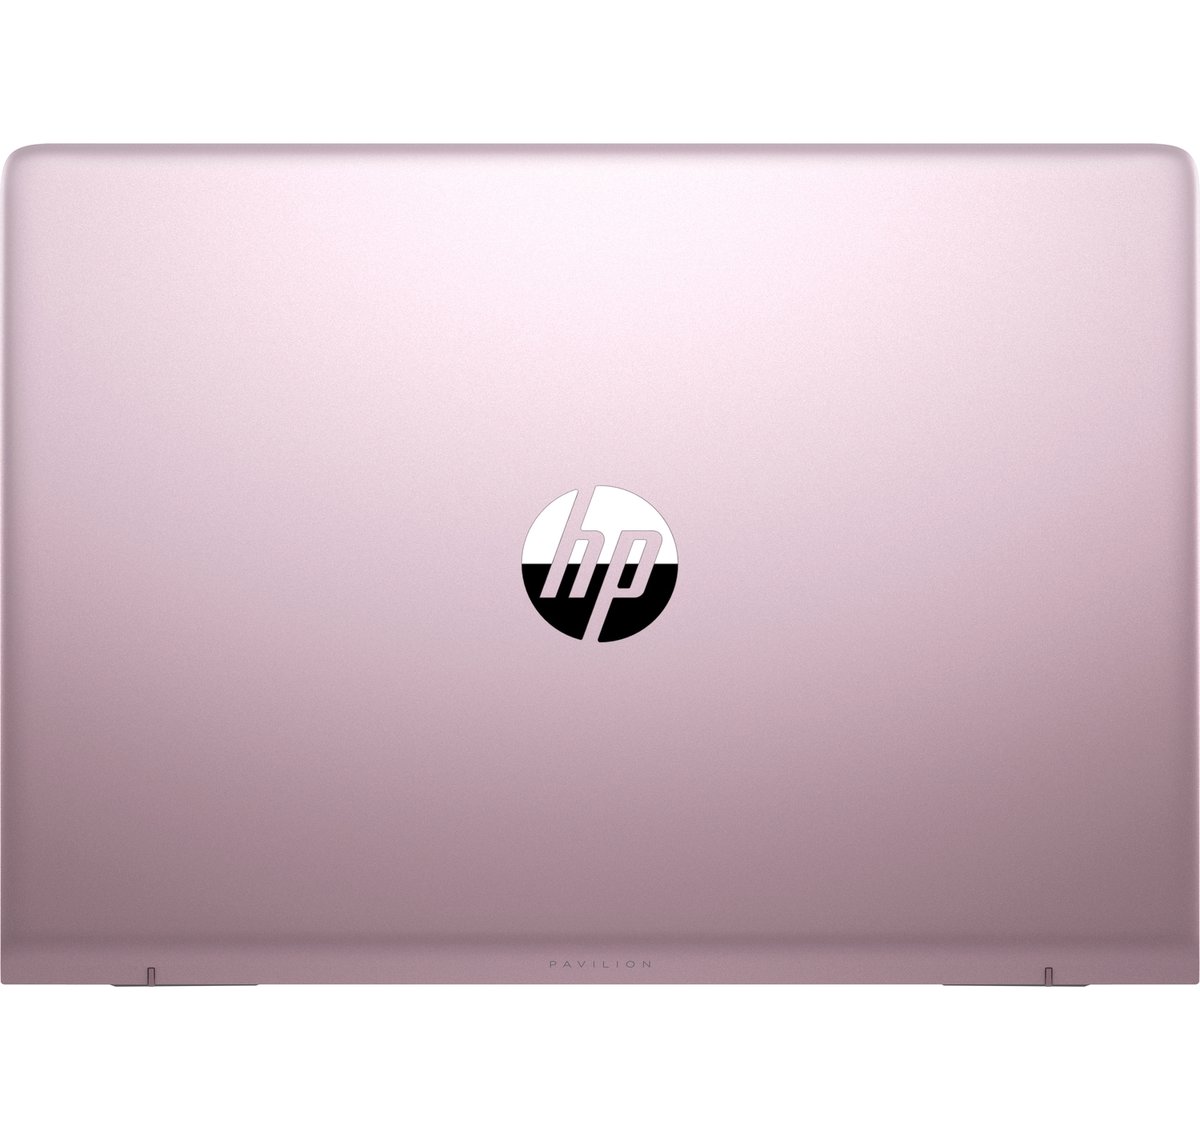 HP Pavilion Laptop 14-bf011ur